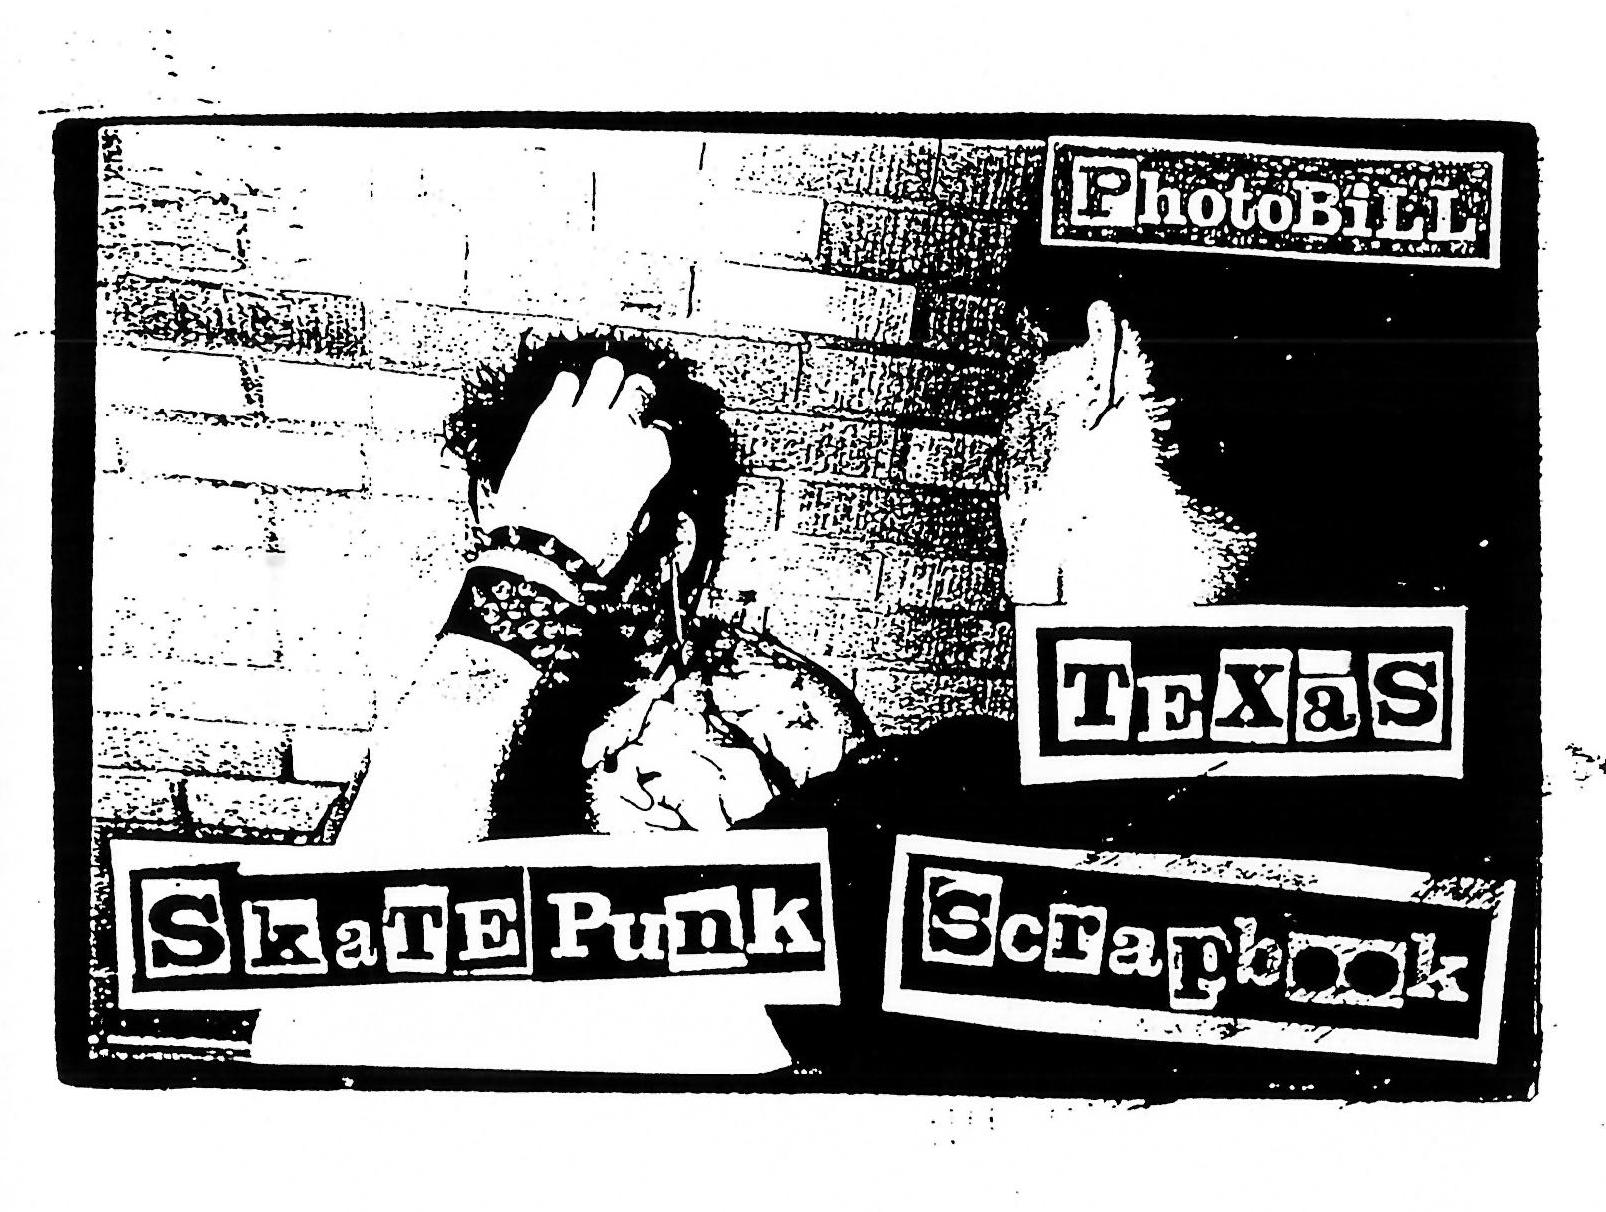 Texas Skate Punk Scrapbook flyer